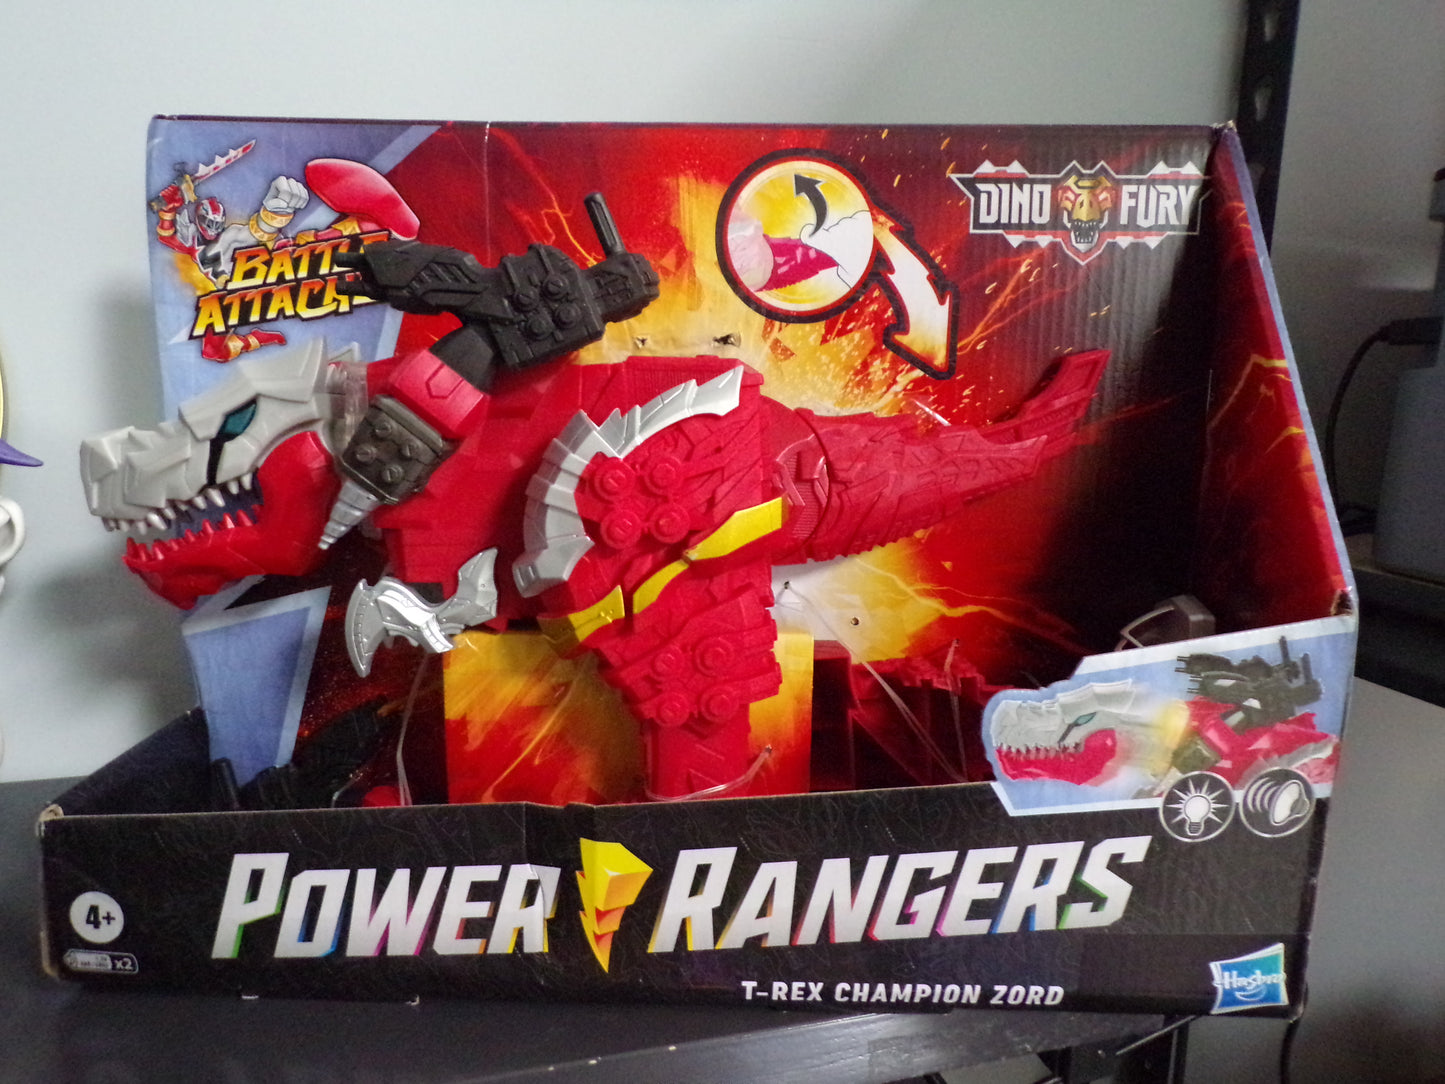 Hasbro Power Rangers Dino Fury Battle Attackers - T-Rex Champion Zord